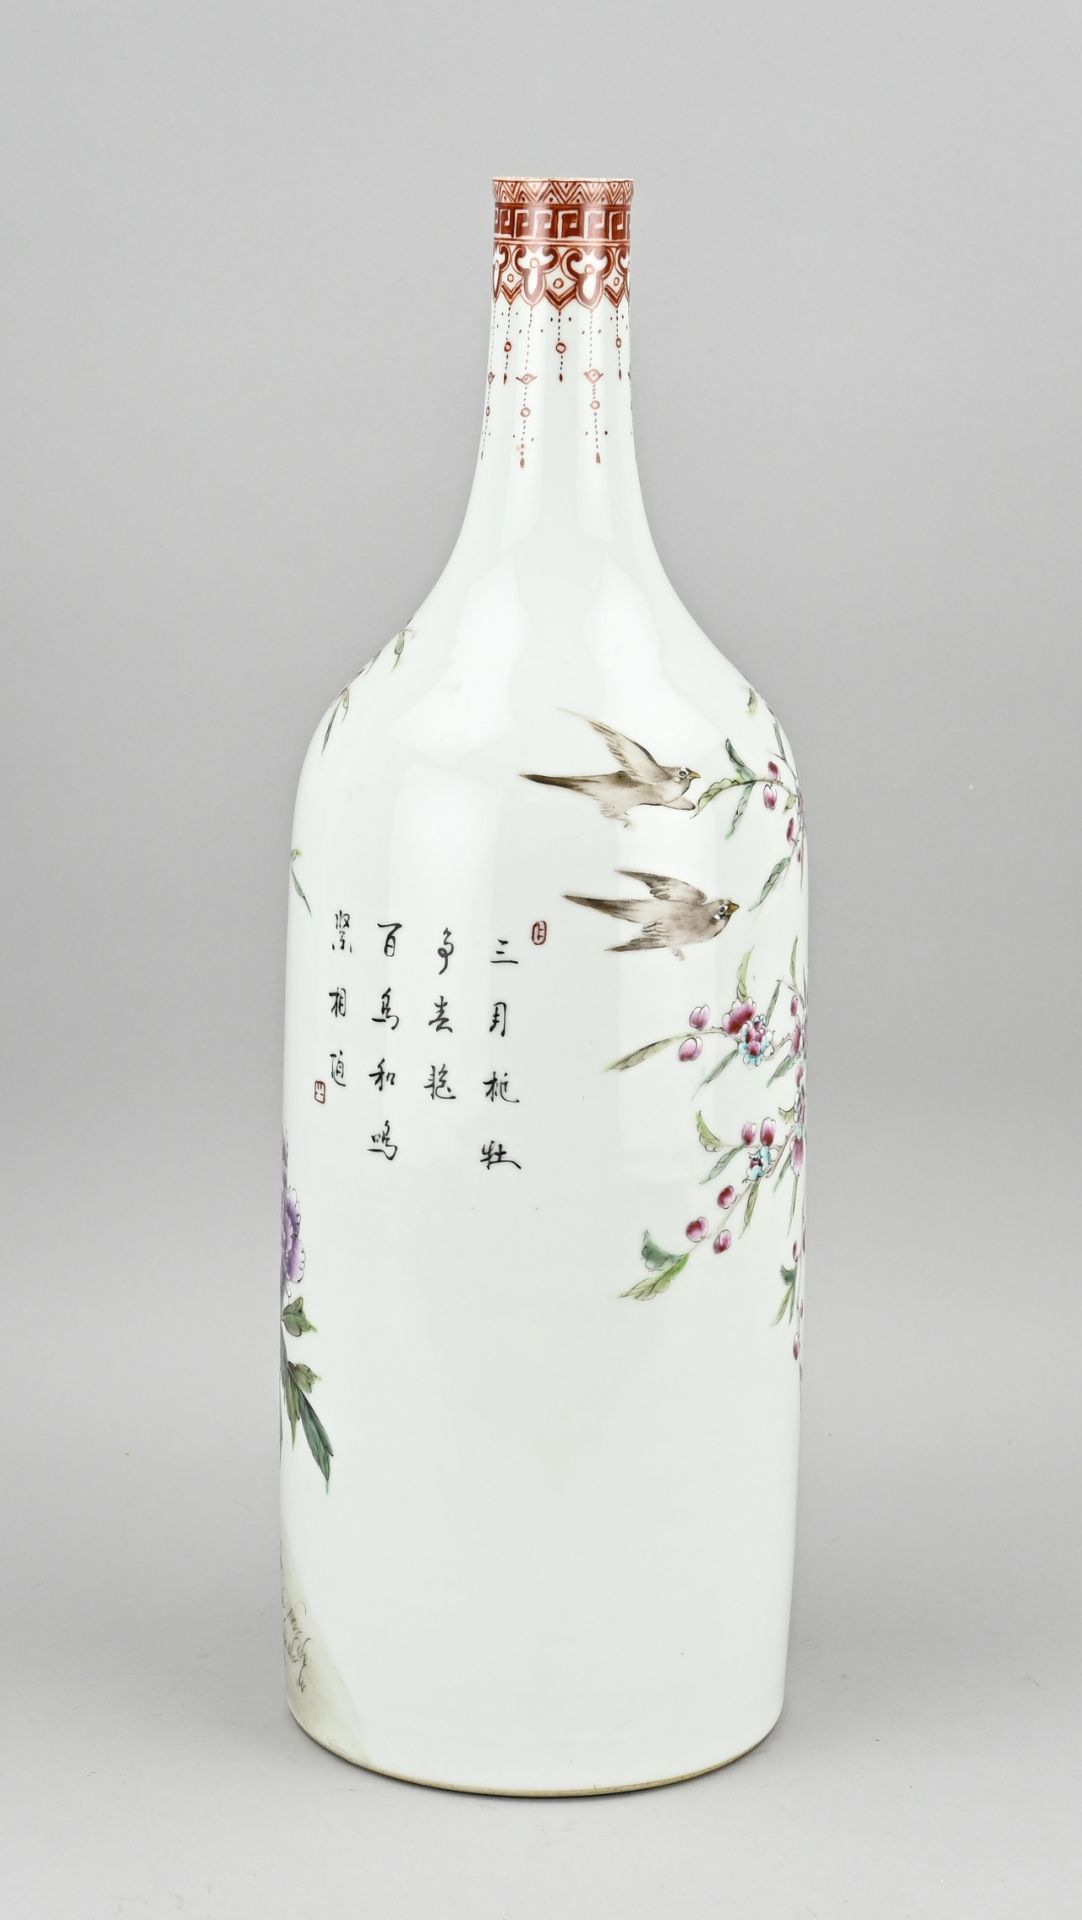 Chinese vase in bottle shape, H 46 cm. - Image 2 of 3